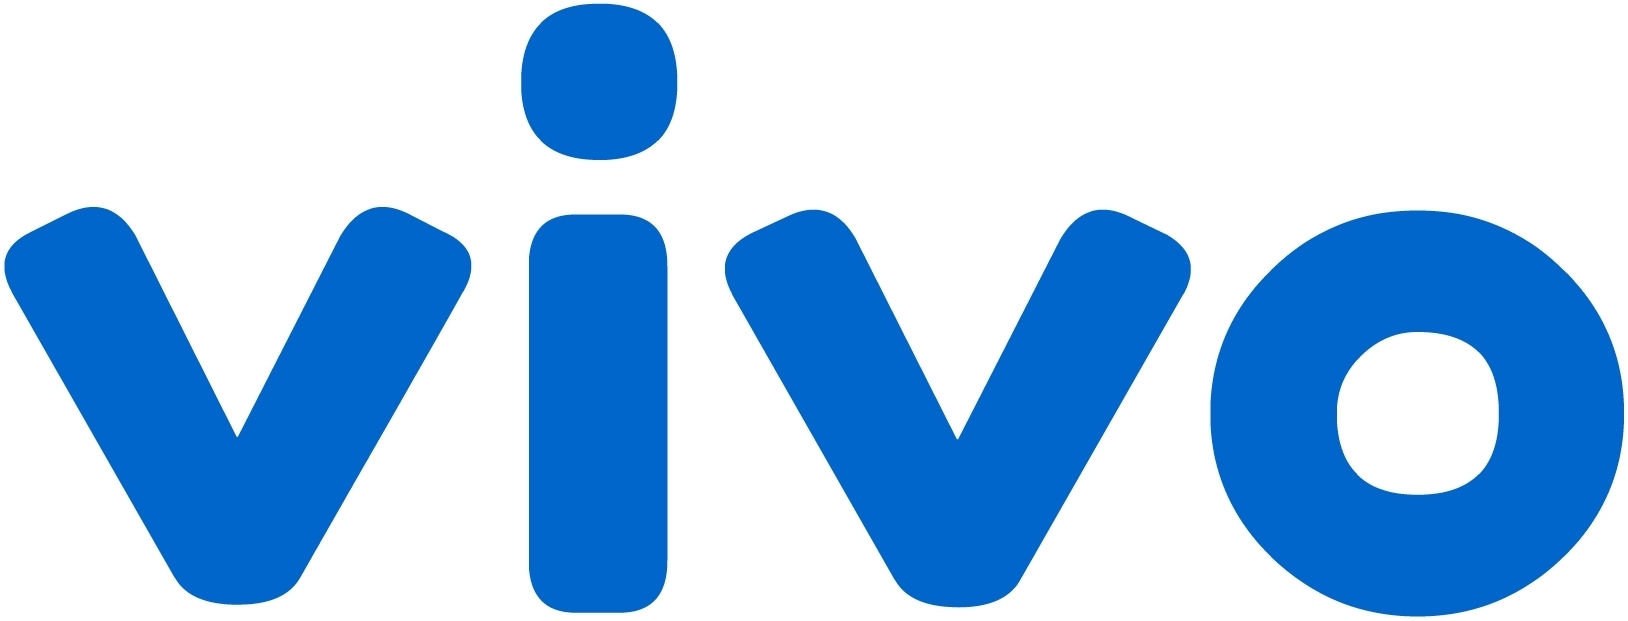 Vivo Empresas Logo photo - 1